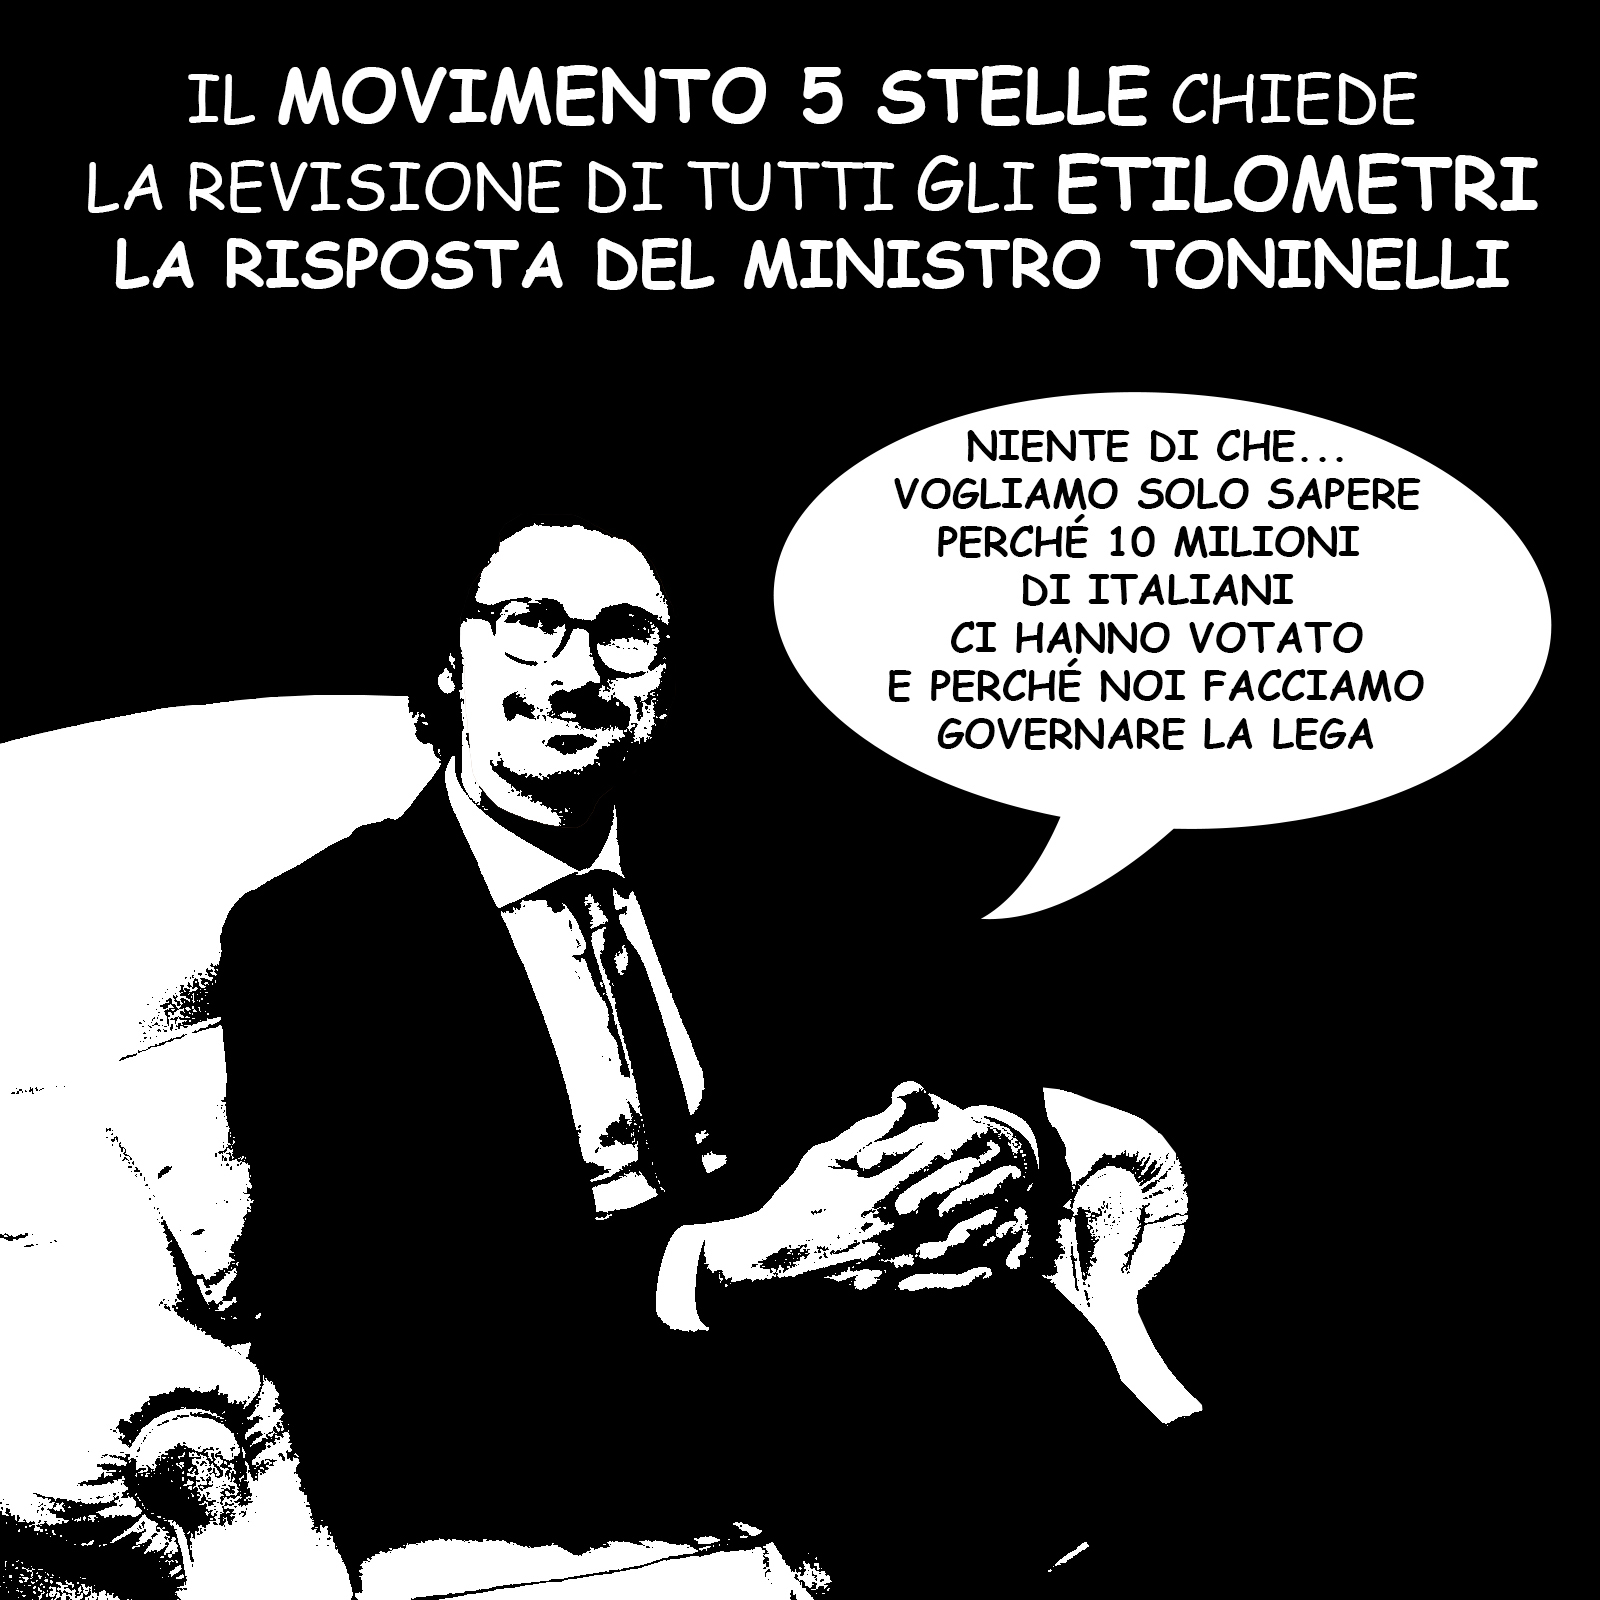 Danilo Toninelli